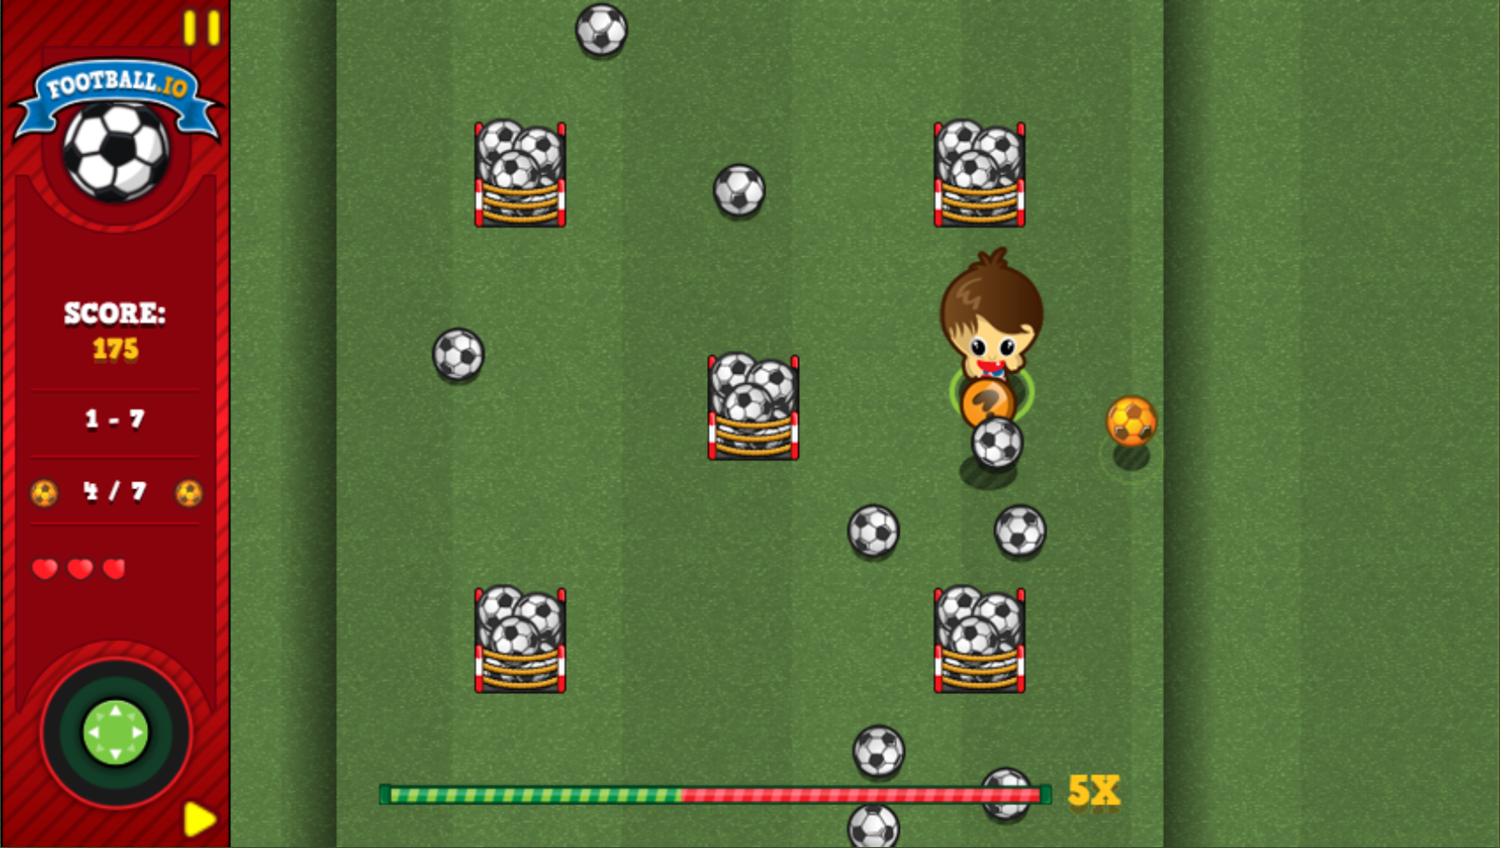 Football.io Game Progress Screenshot.